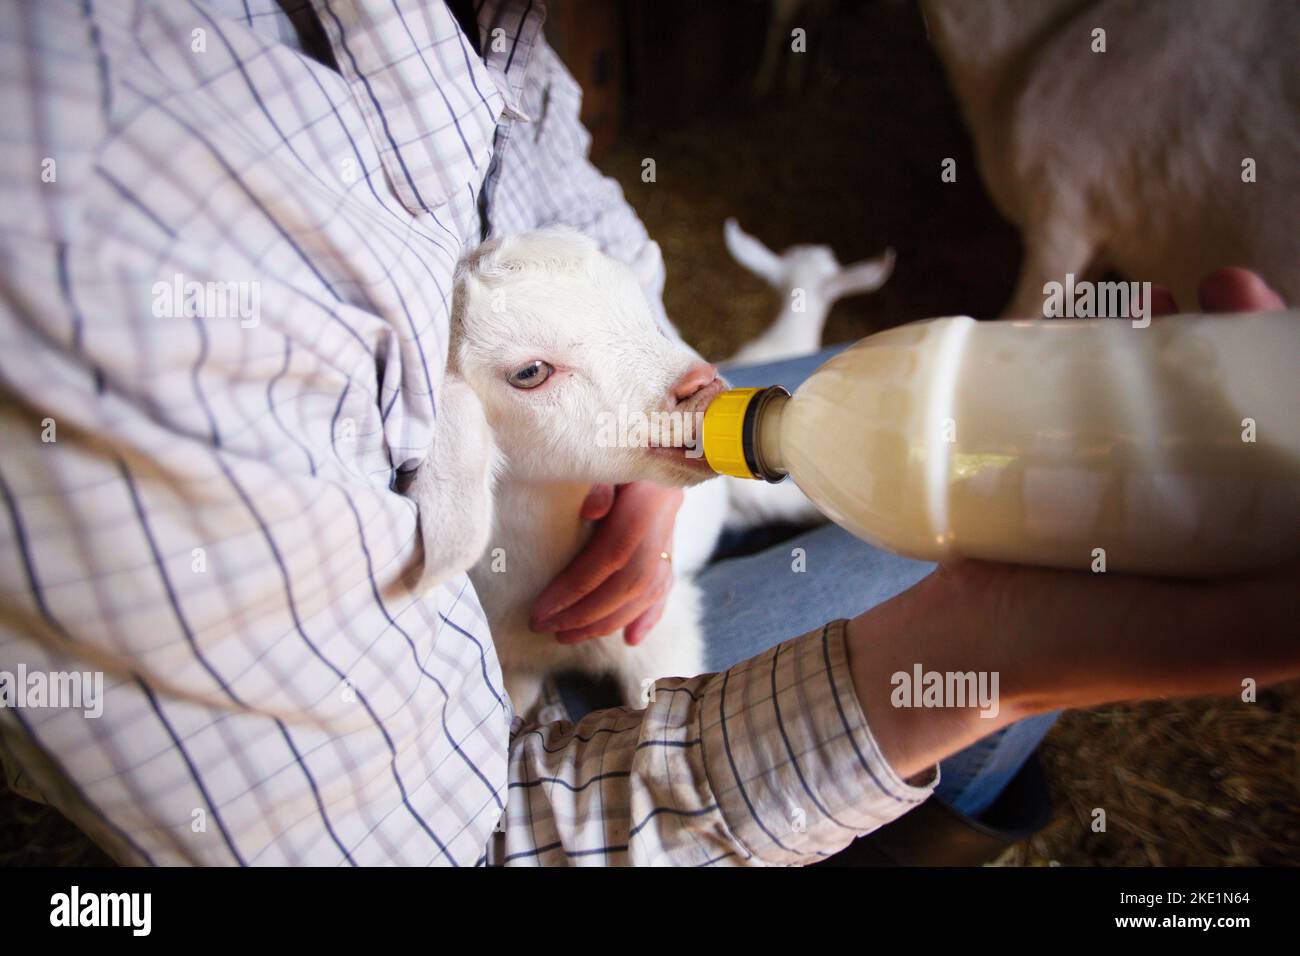 A man feeding his fainting goat on his body Stock Photo